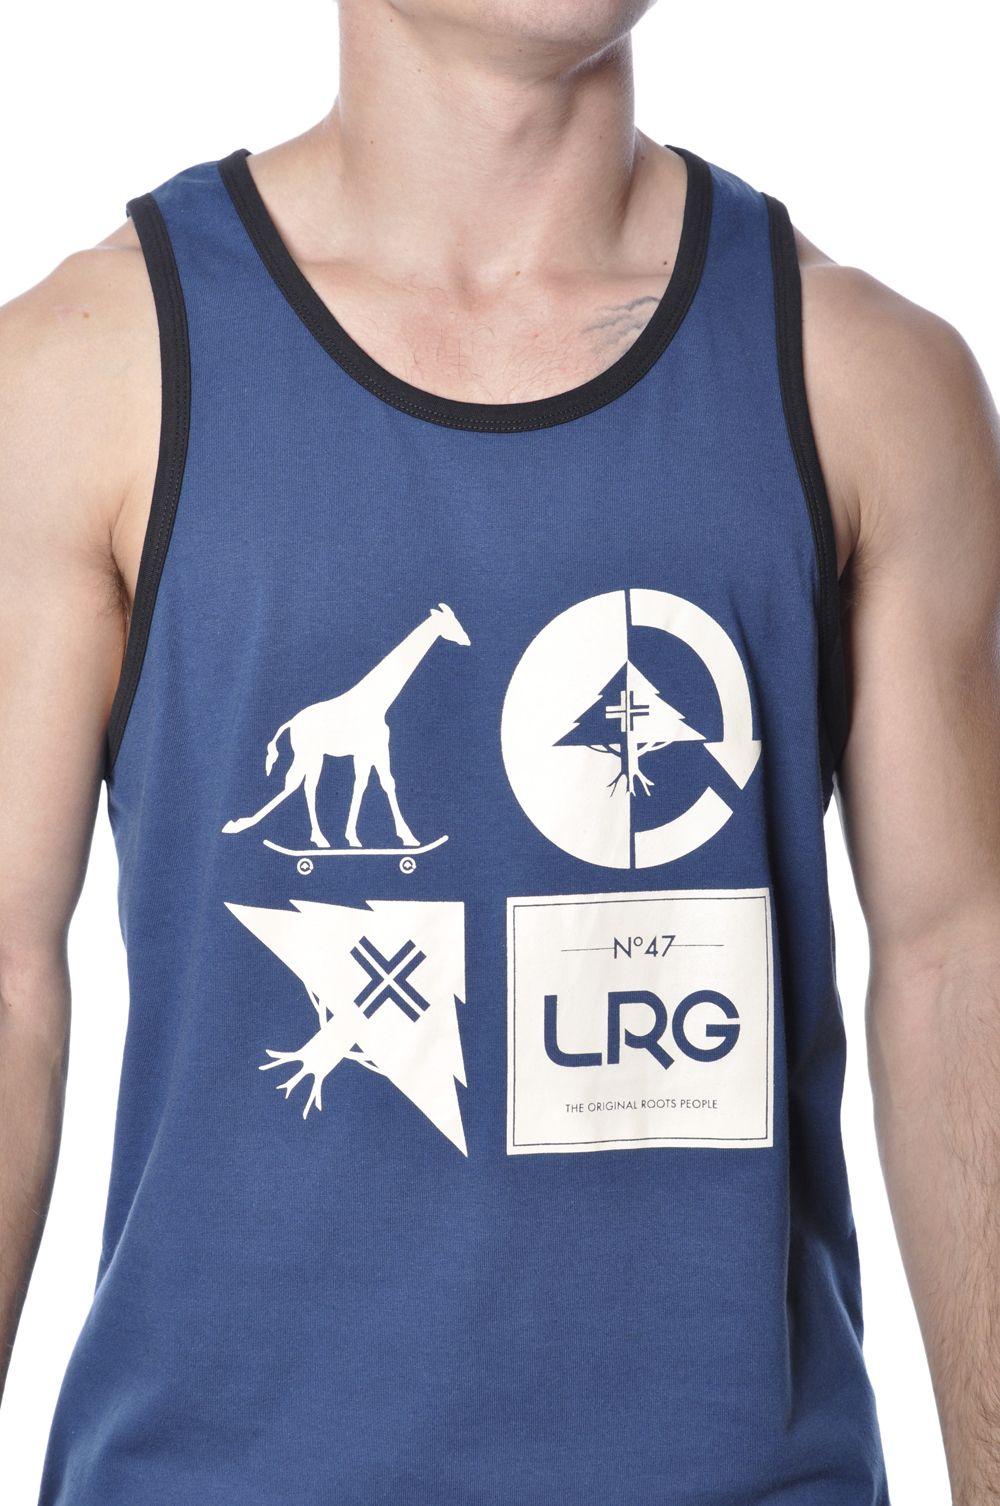 LRG Original Logo - LRG Mash Up Tank Top Shirt Mens Blue Lifted Research Group - Walmart.com